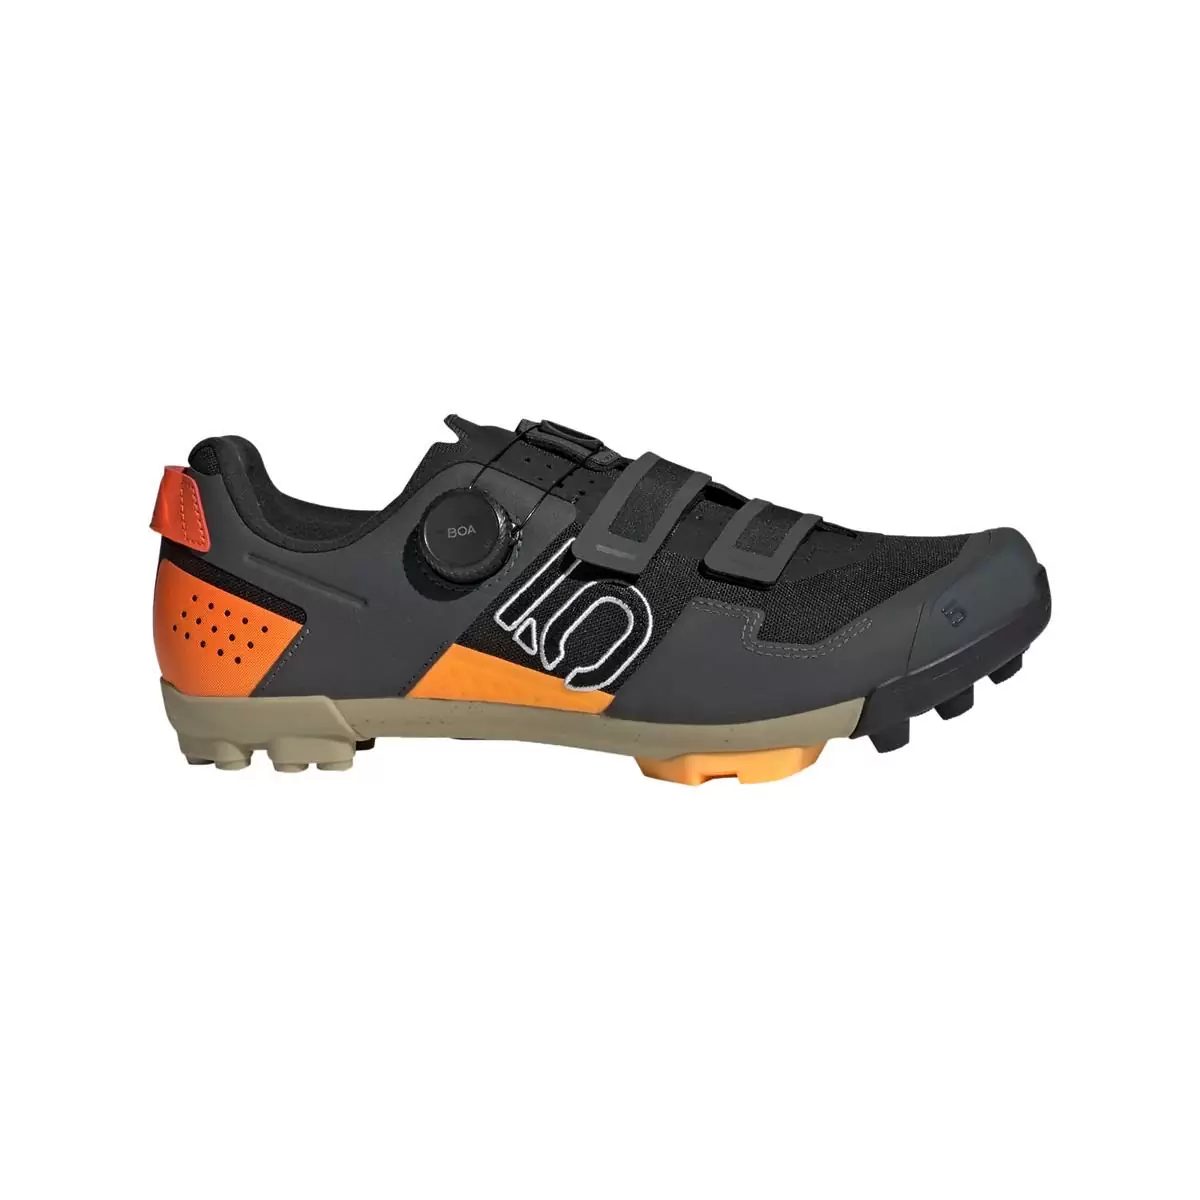 Clip 5.10 Kestrel Boa MTB Shoes Black/Orange Size 42.5 - image